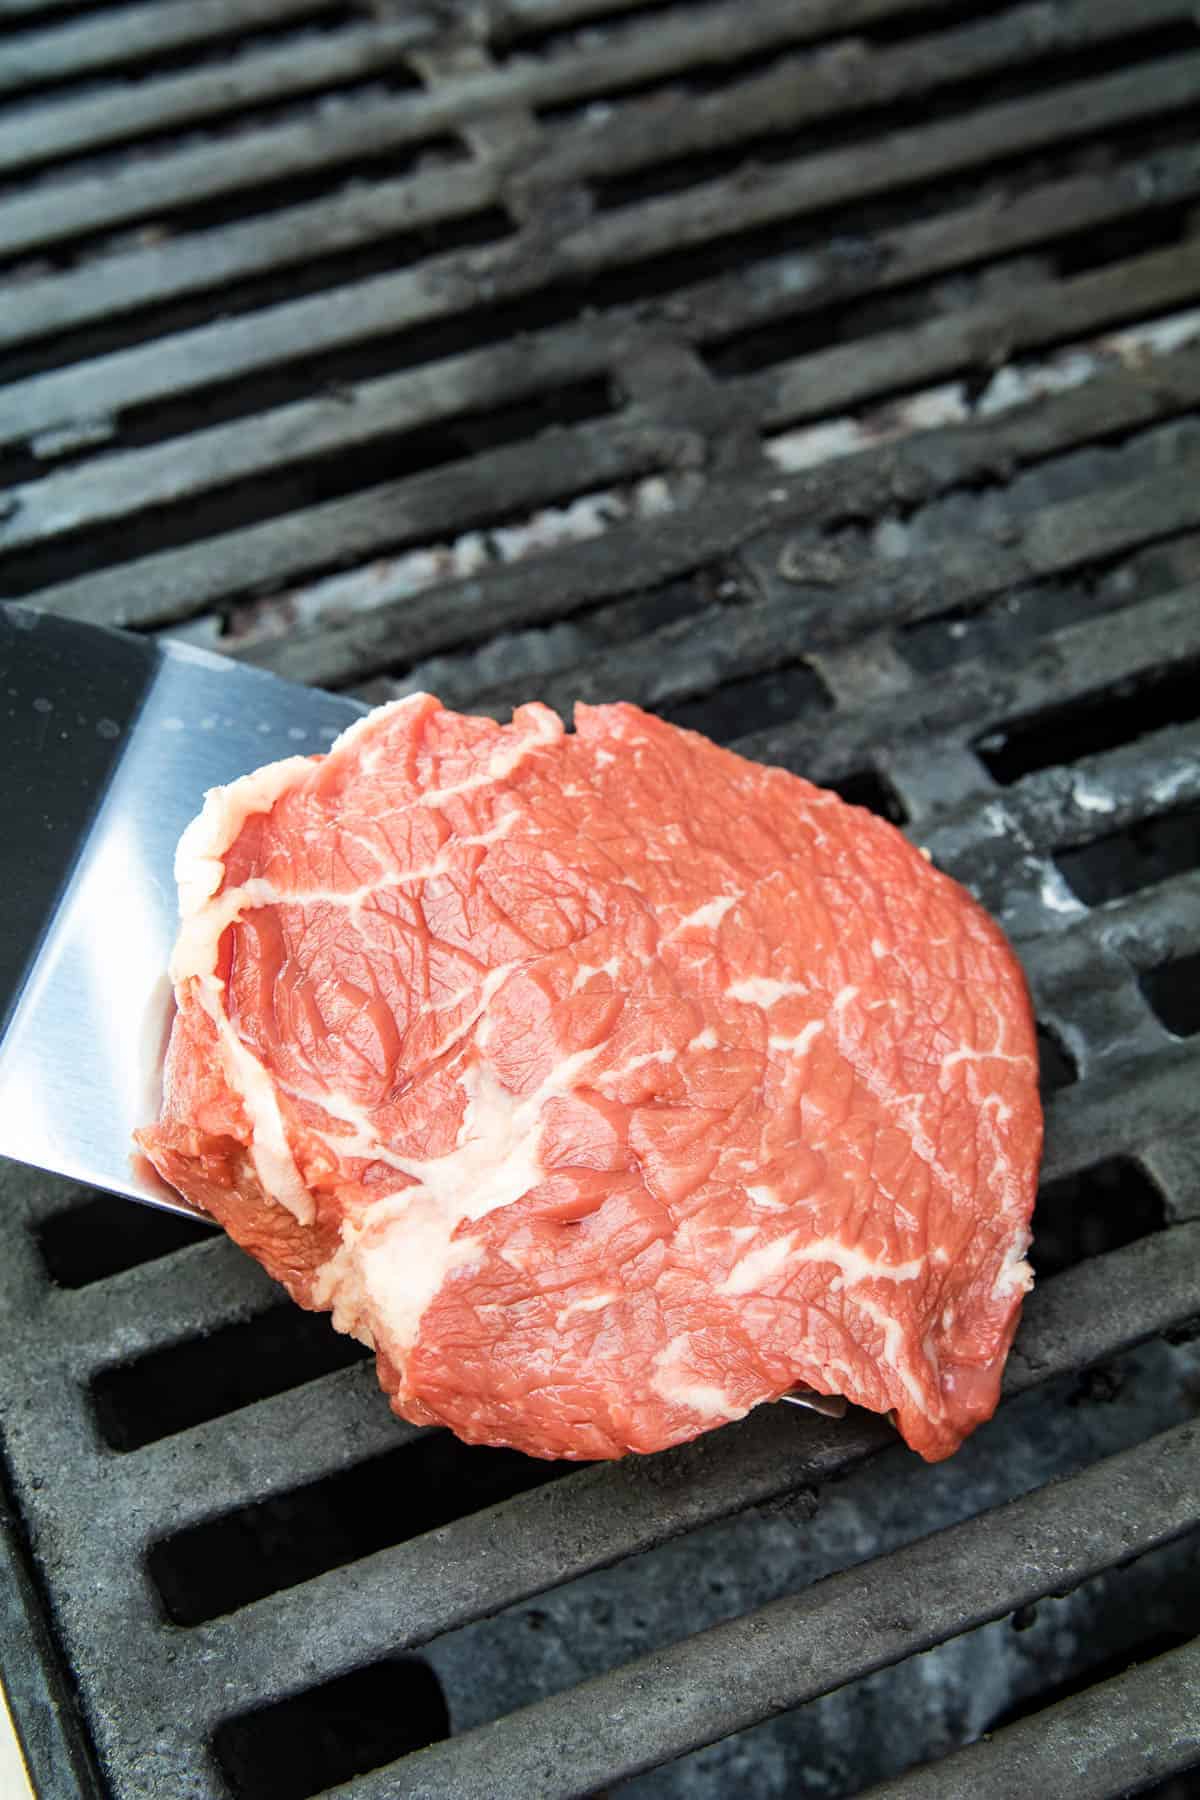 Spatula placing ribeye on grill